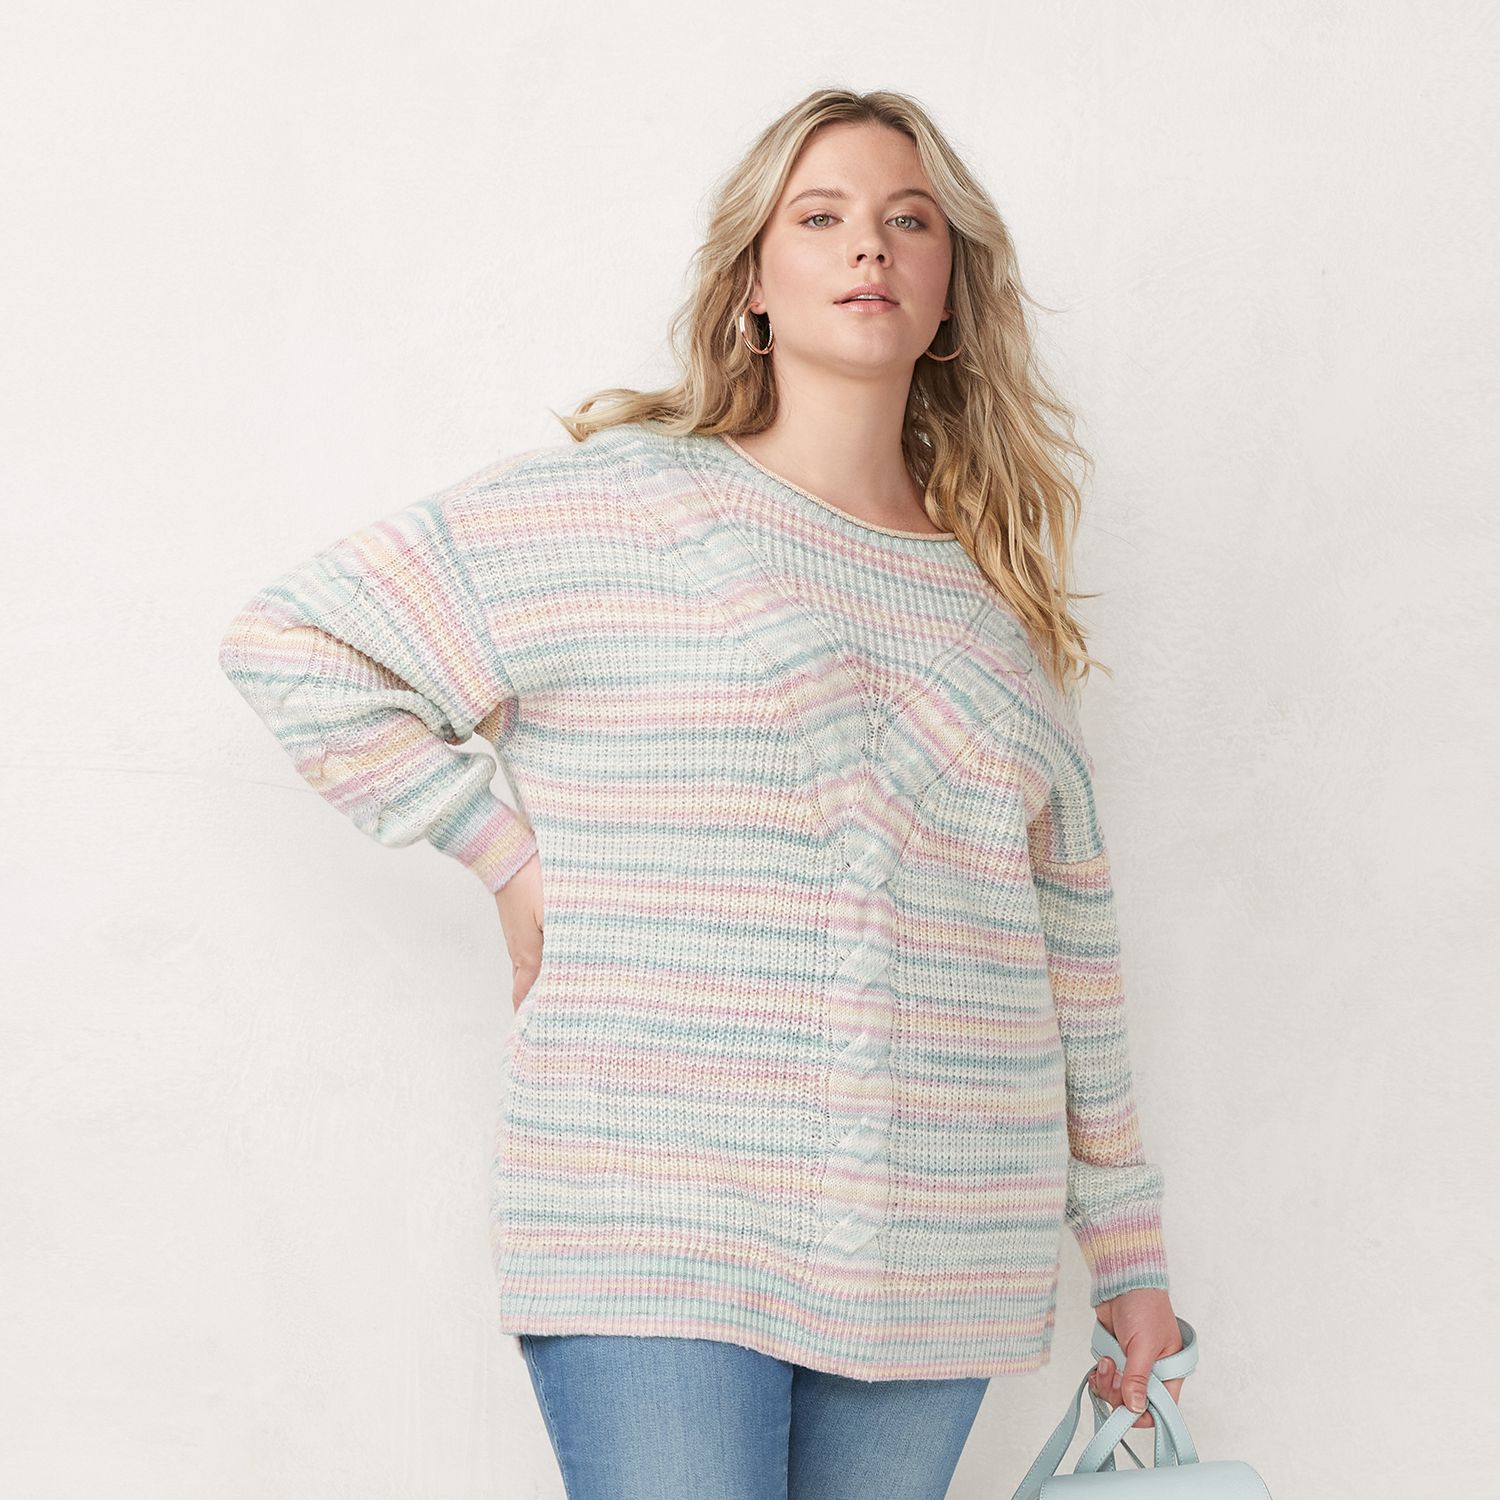 Image for LC Lauren Conrad Plus Size Drop Shoulder Sweater at Kohl's.